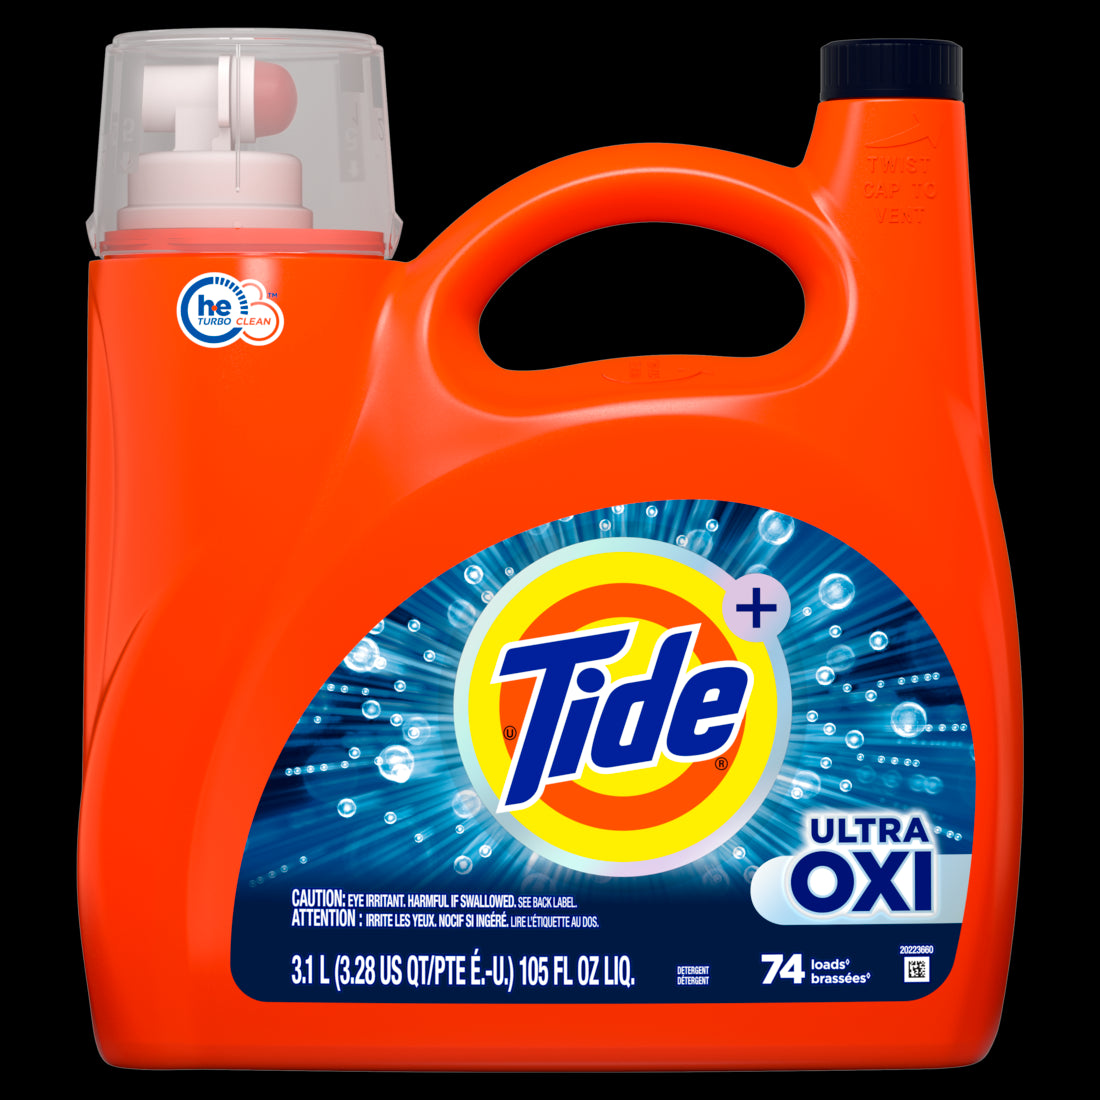 Tide Ultra Oxi Liquid Laundry Detergent 74 loads HE Compatible - 105oz/4pk